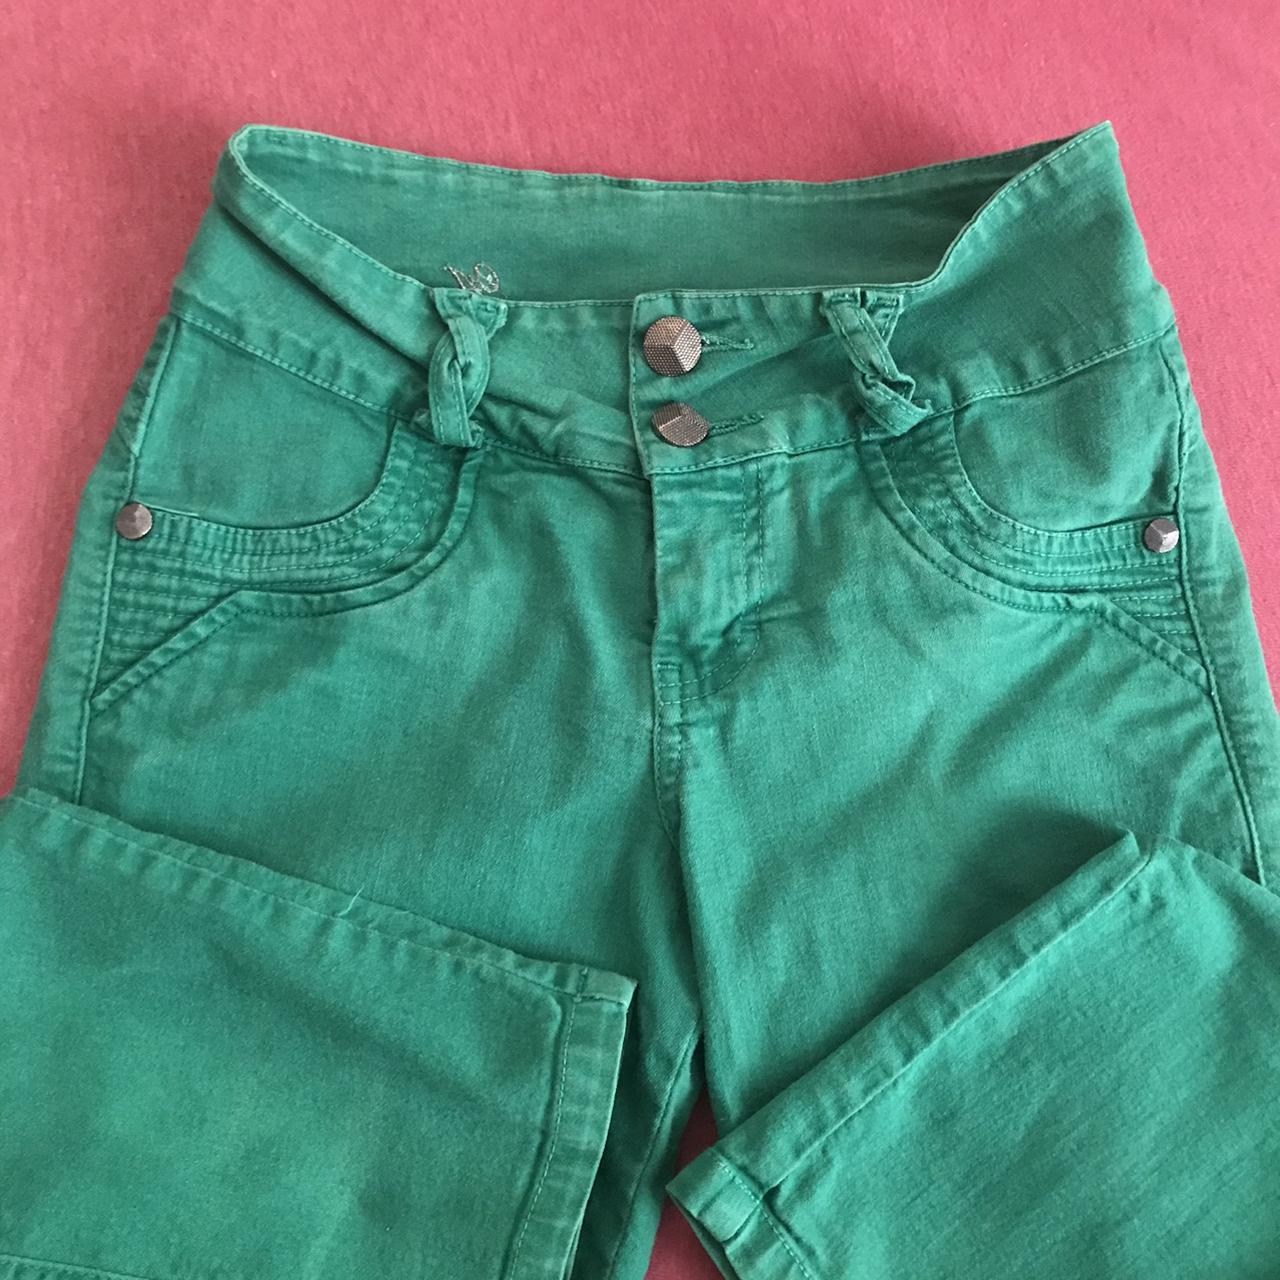 Green Jeans For Women